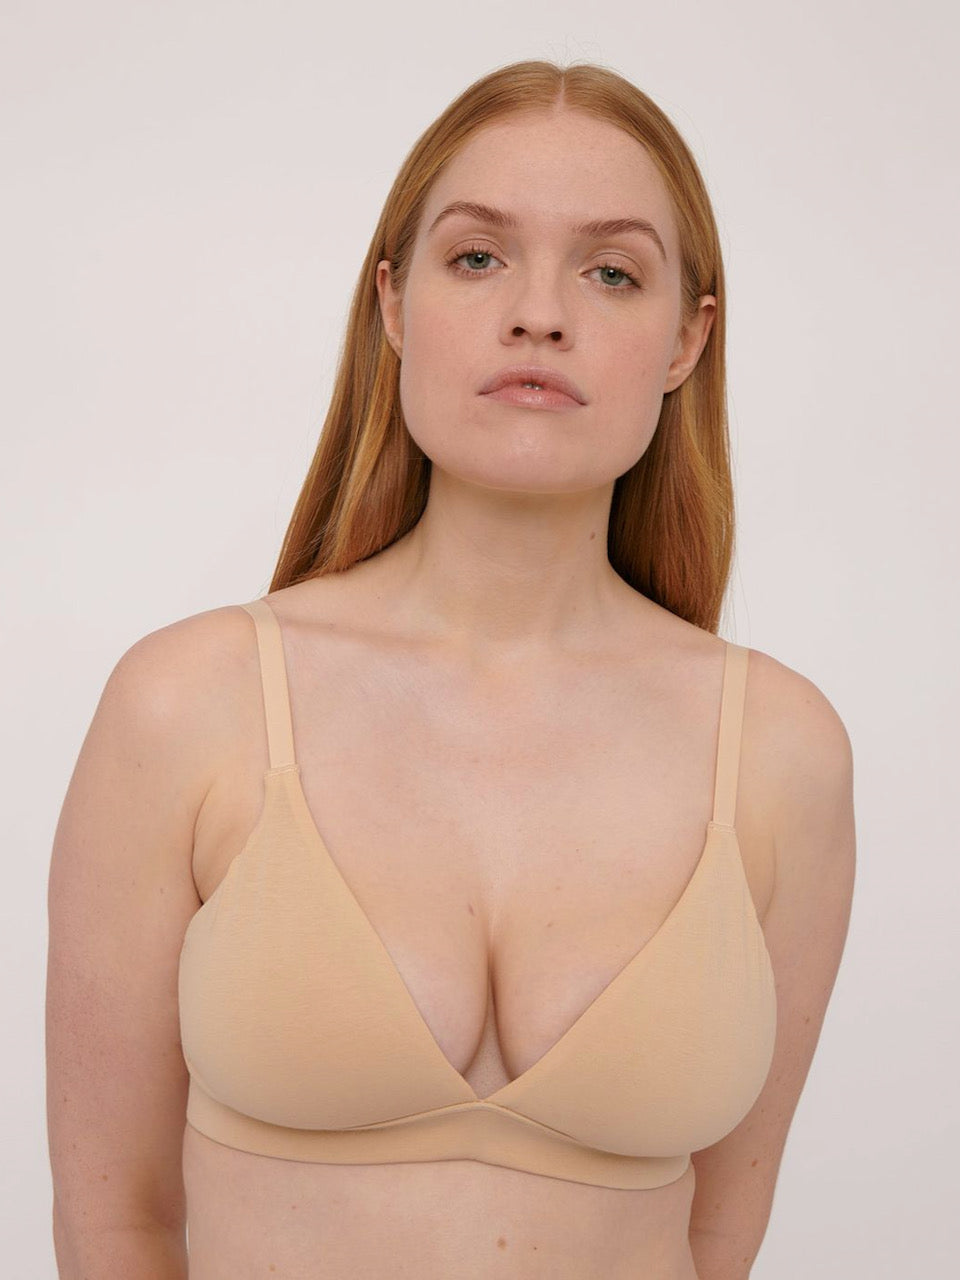 A woman in a tan bikini is posing for a photo wearing the Triangle Bra ⋅ organic cotton – Oak by Organic Basics.